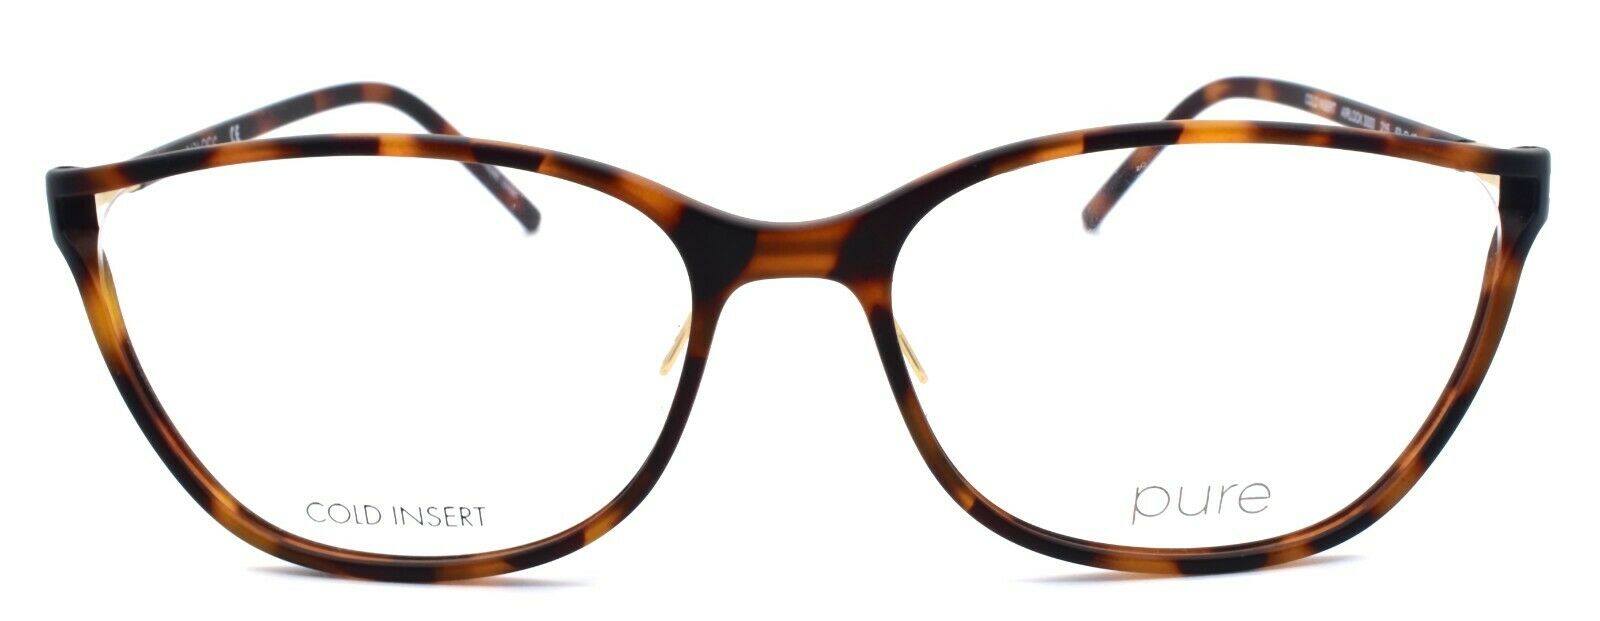 2-Marchon Airlock 3000 215 Women's Eyeglasses Frames 53-15-140 Matte Tortoise-886895394178-IKSpecs